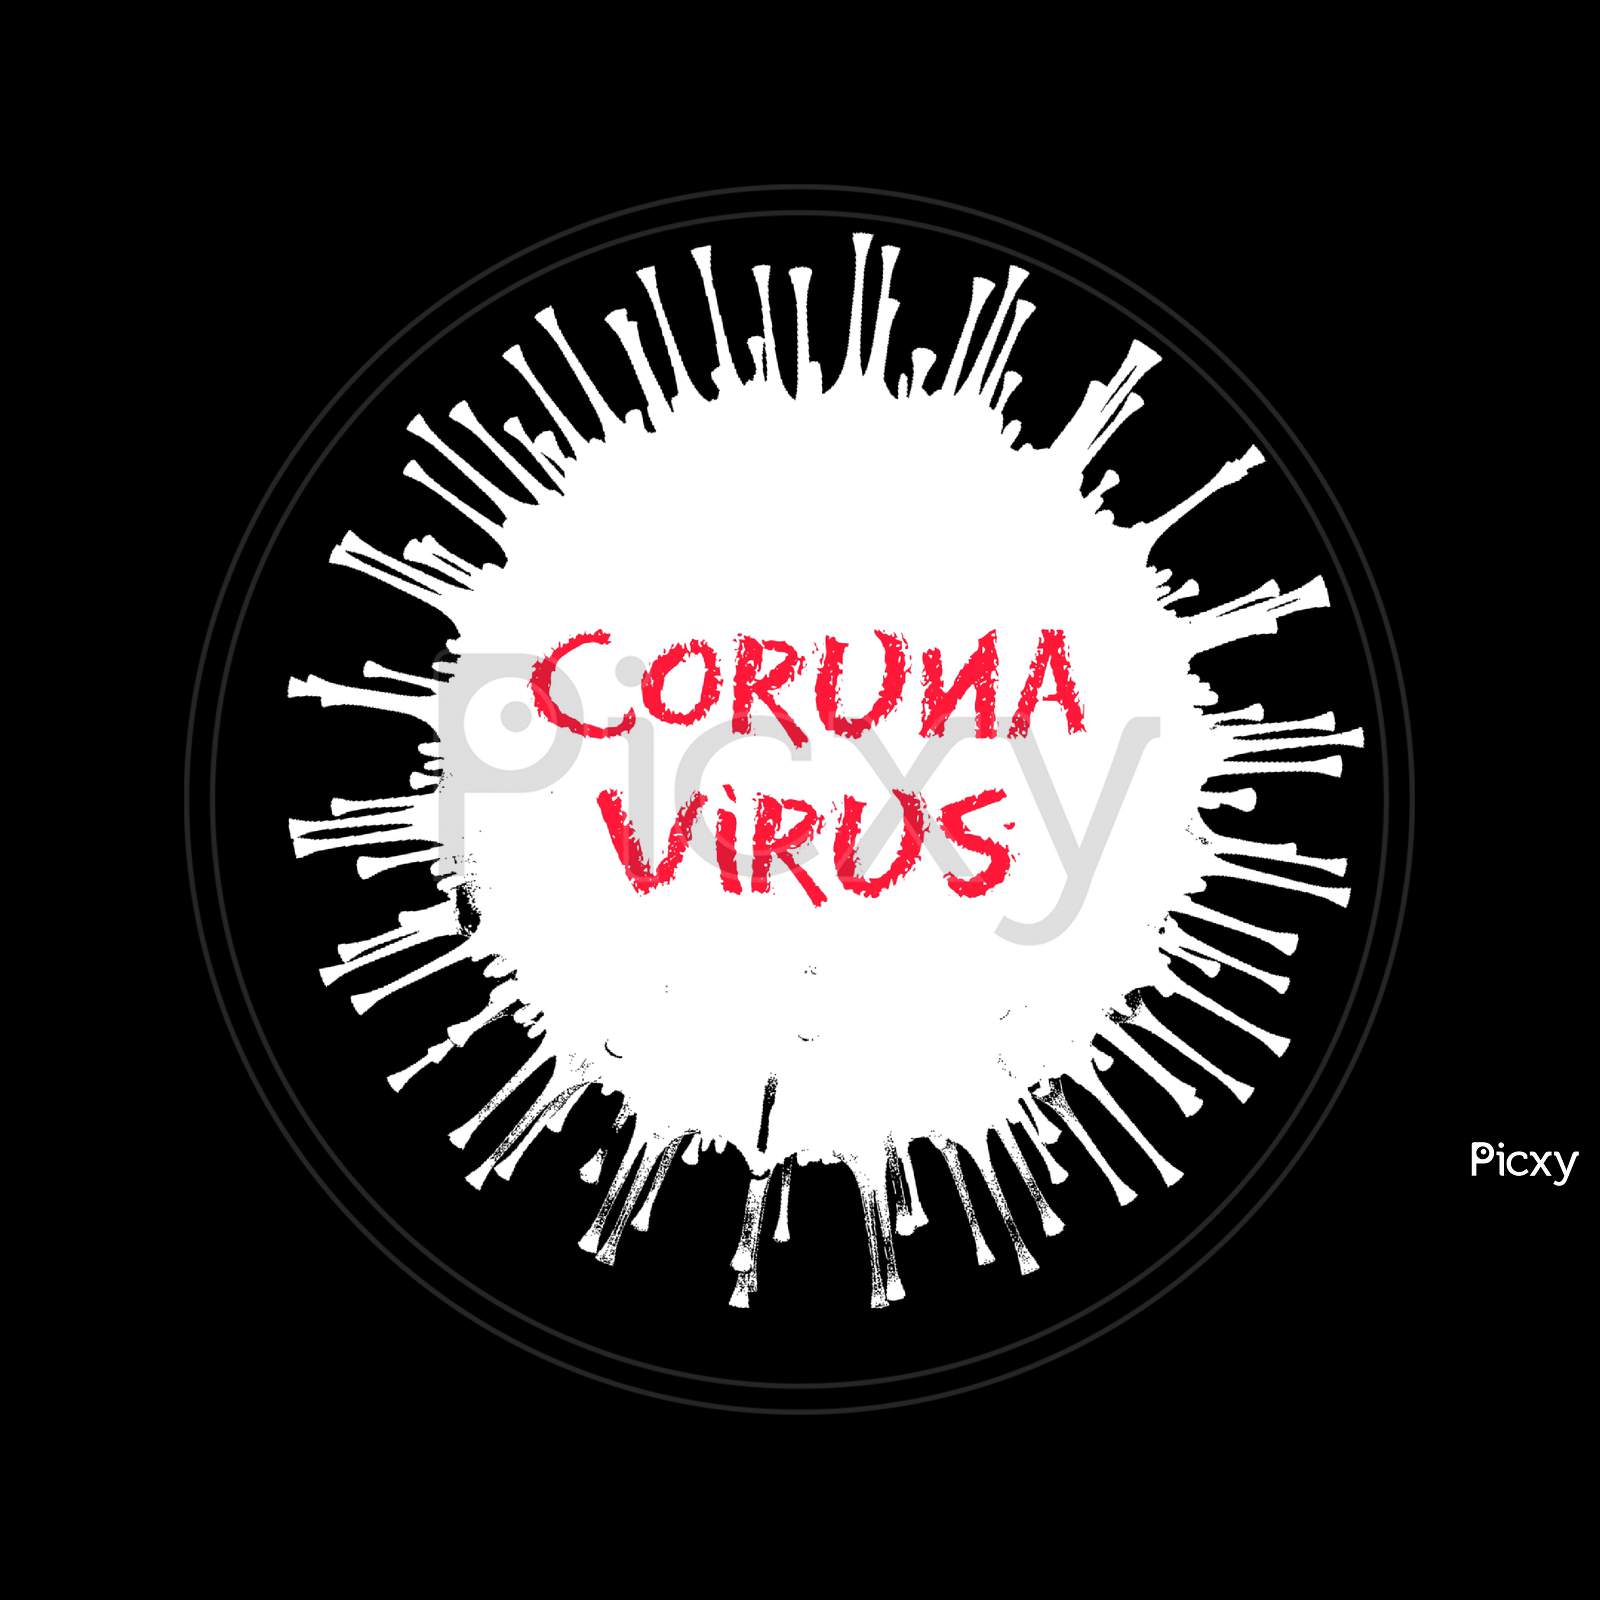 A creative art design coruna virus.